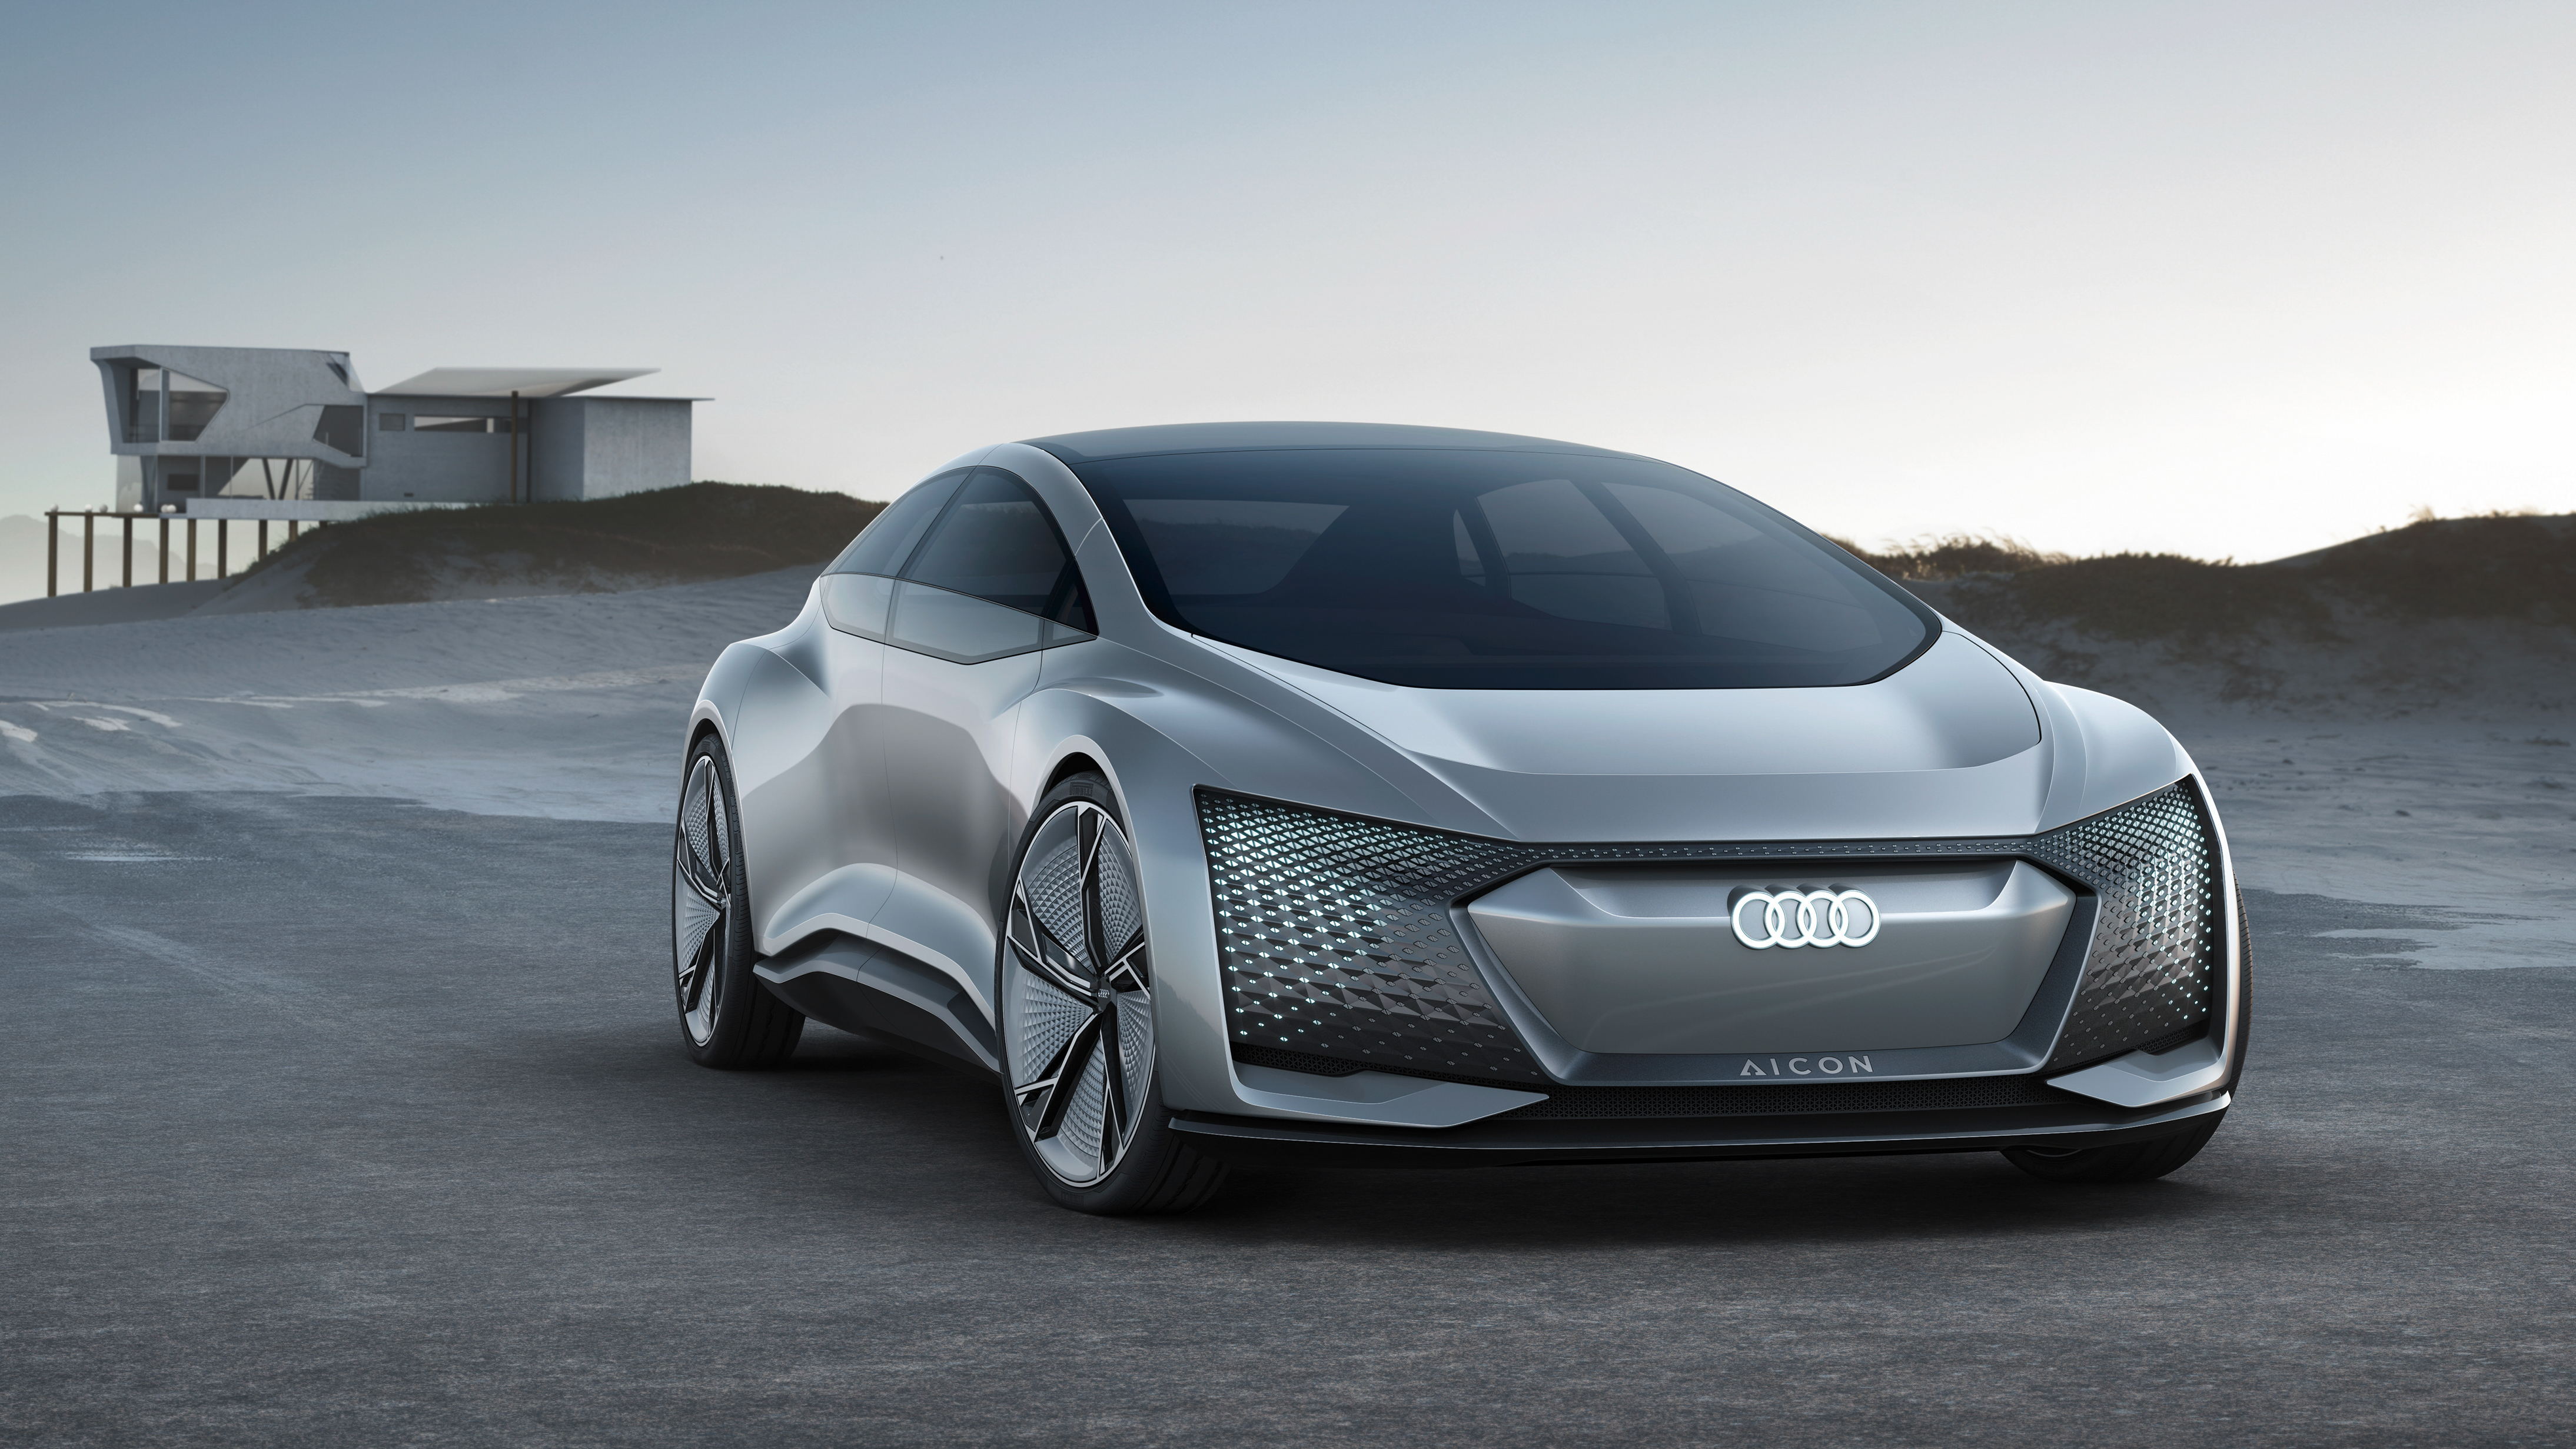 Три новые машины. Audi a9 e-tron. Audi Aicon Concept. Audi a9 суперкар. Ауди концепт кар 2020.